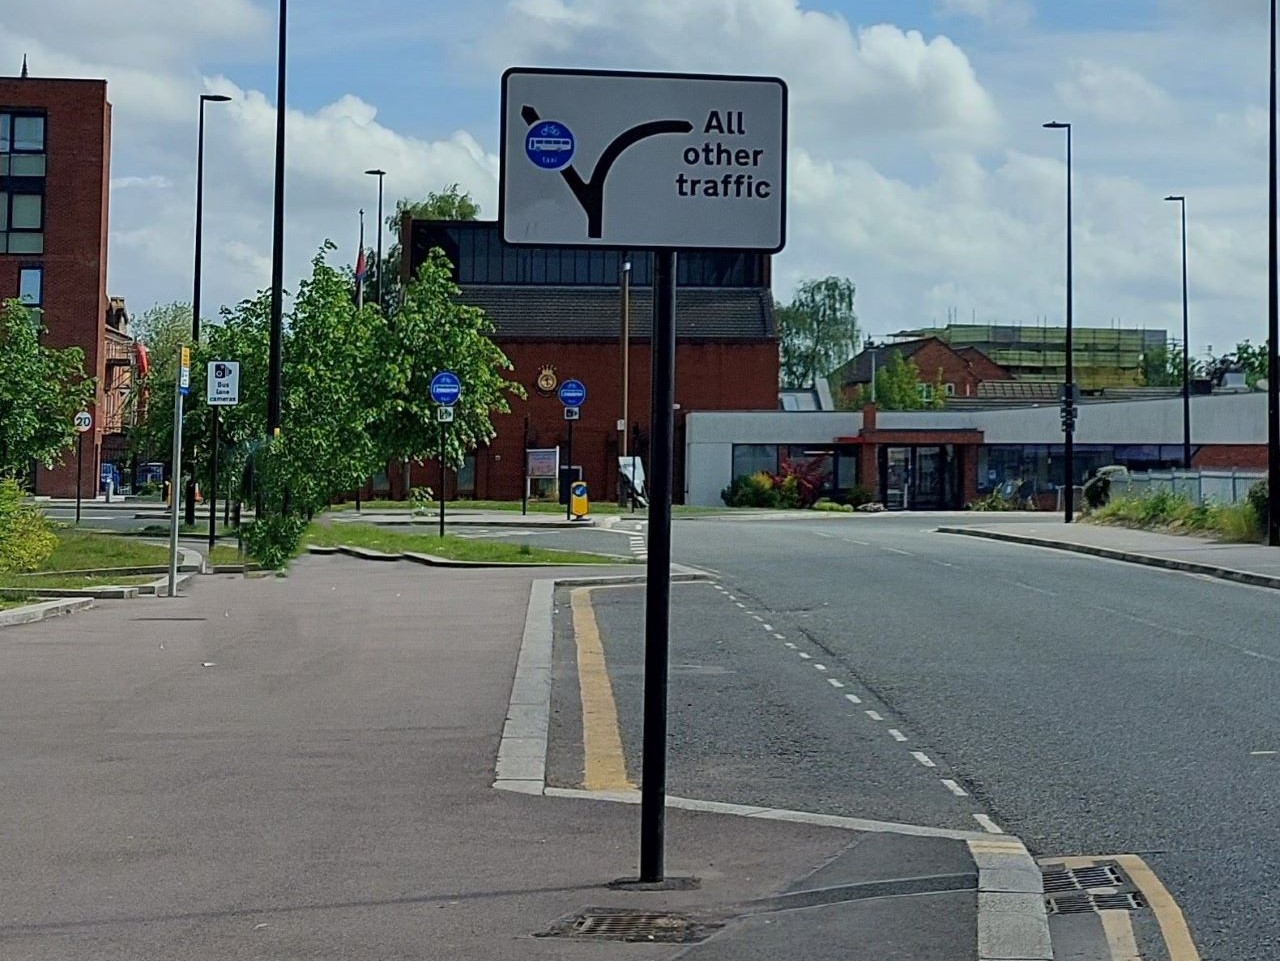 Academy Street bus lane - directional signage